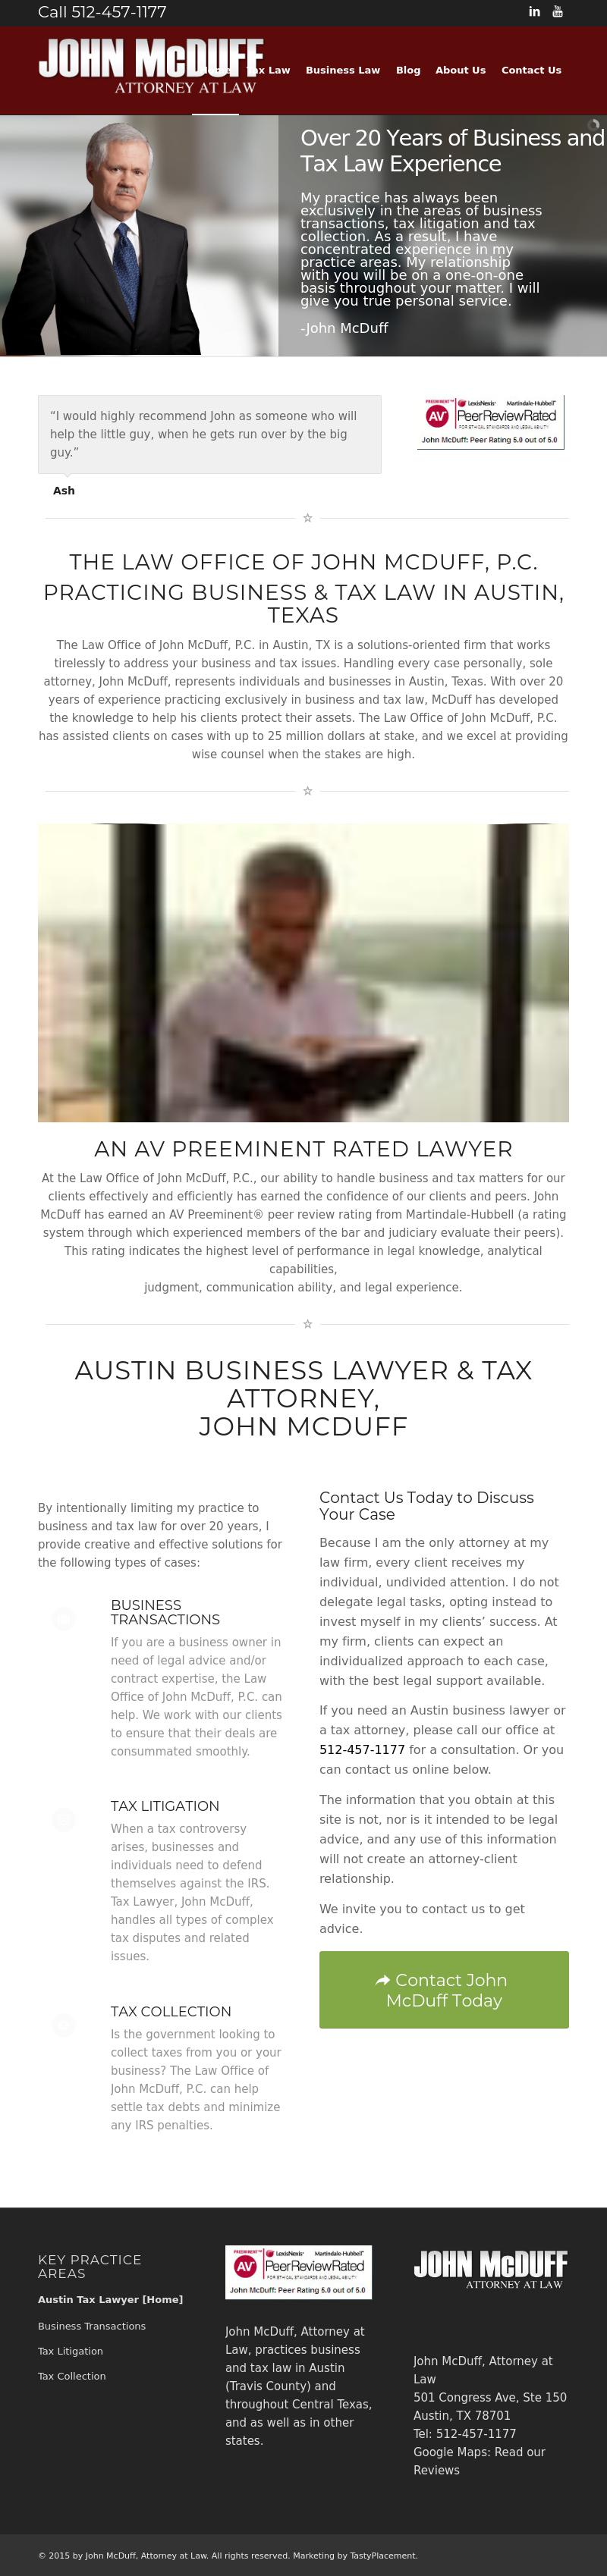 Mcduff, John - Austin TX Lawyers